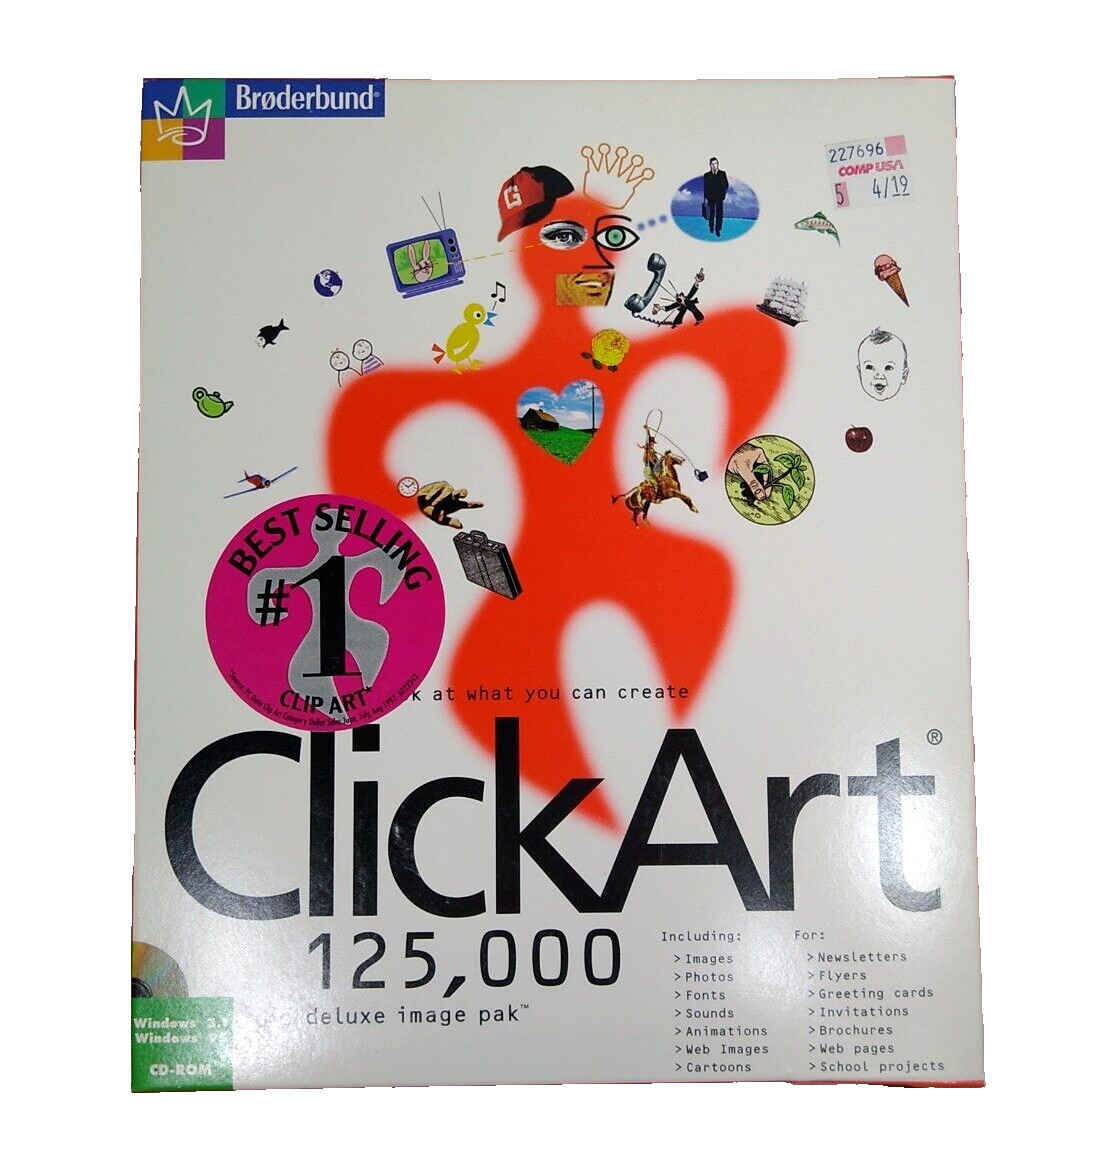 PC CD-Rom Broderbund CLICKART 125,000 Deluxe Image Pak WIN95 SEALED Unopened